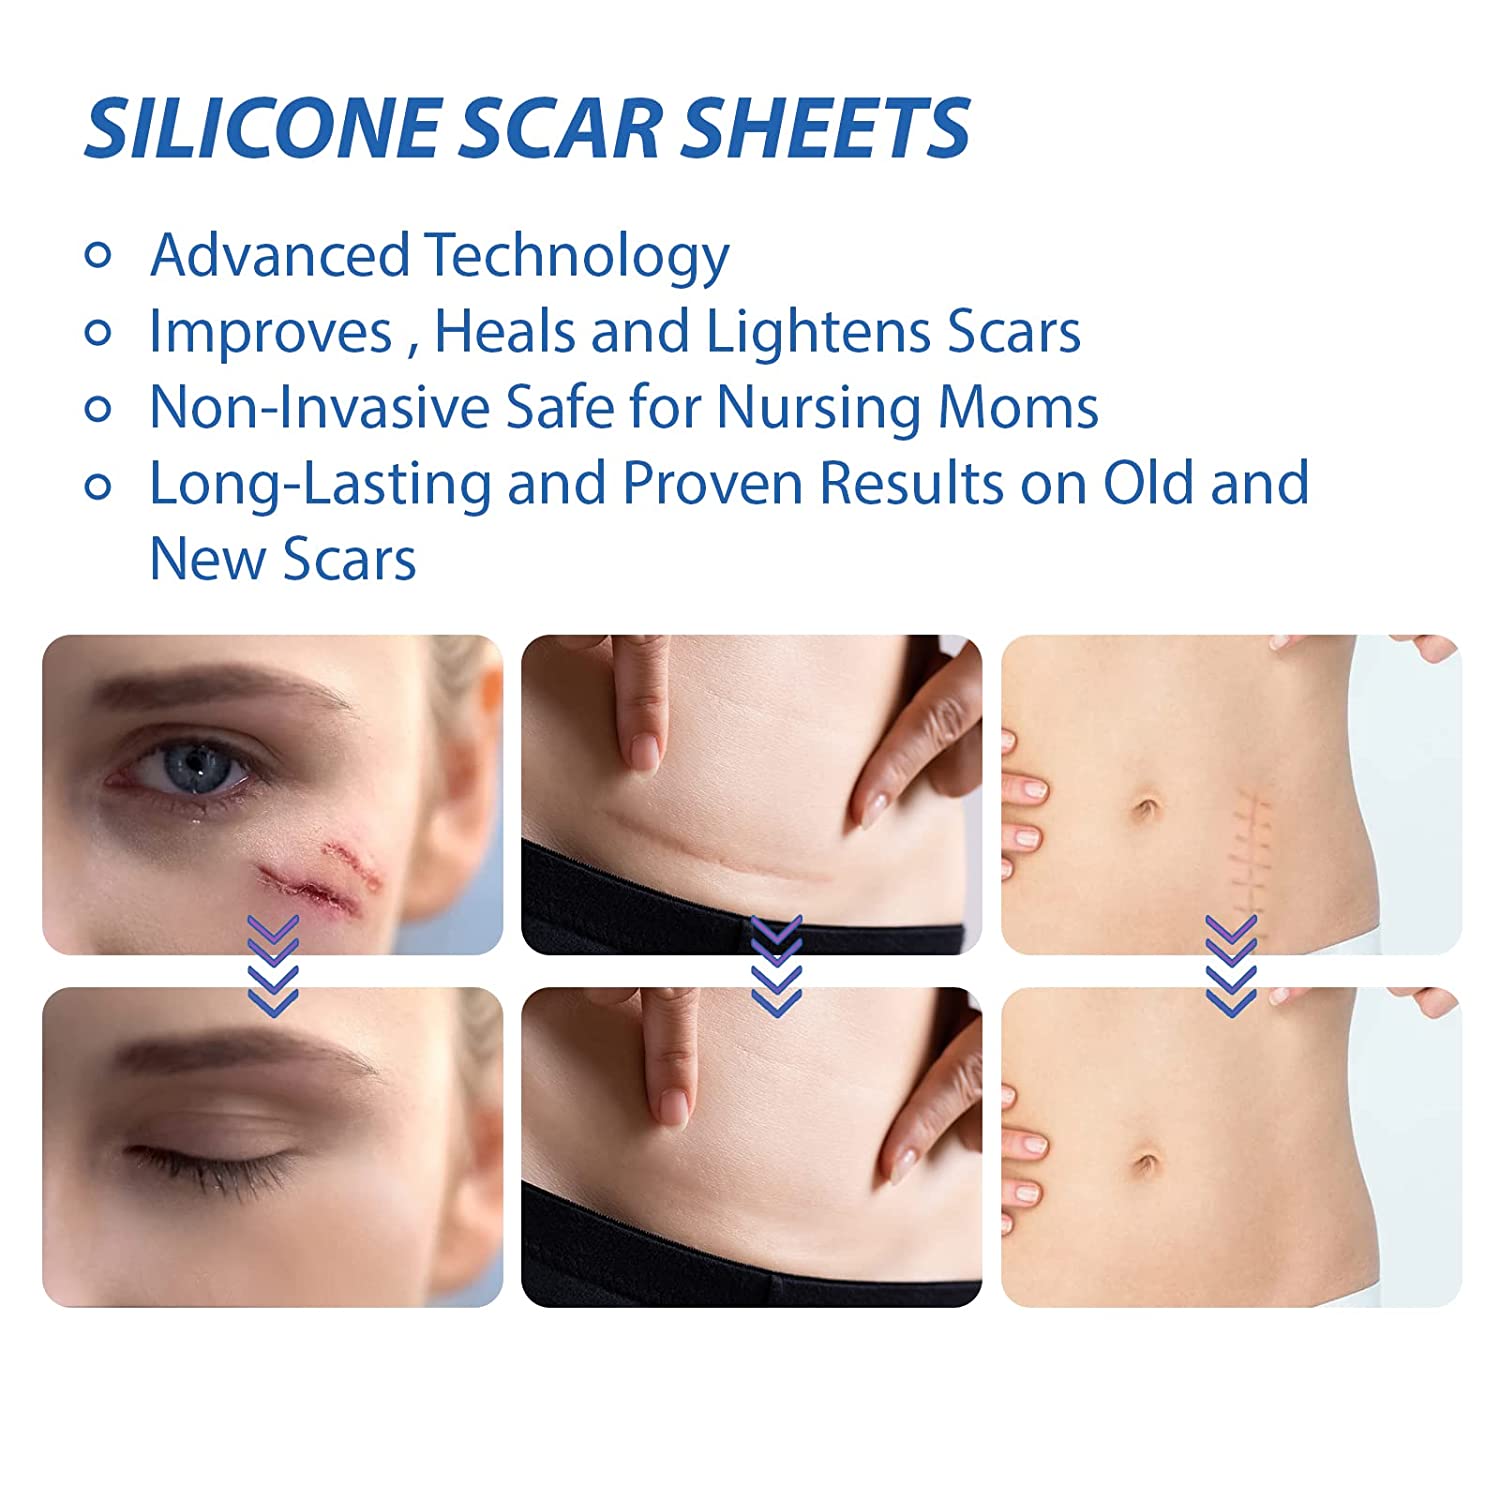 ScarAway Silicone Scar Sheets - Medrock Pharmacy